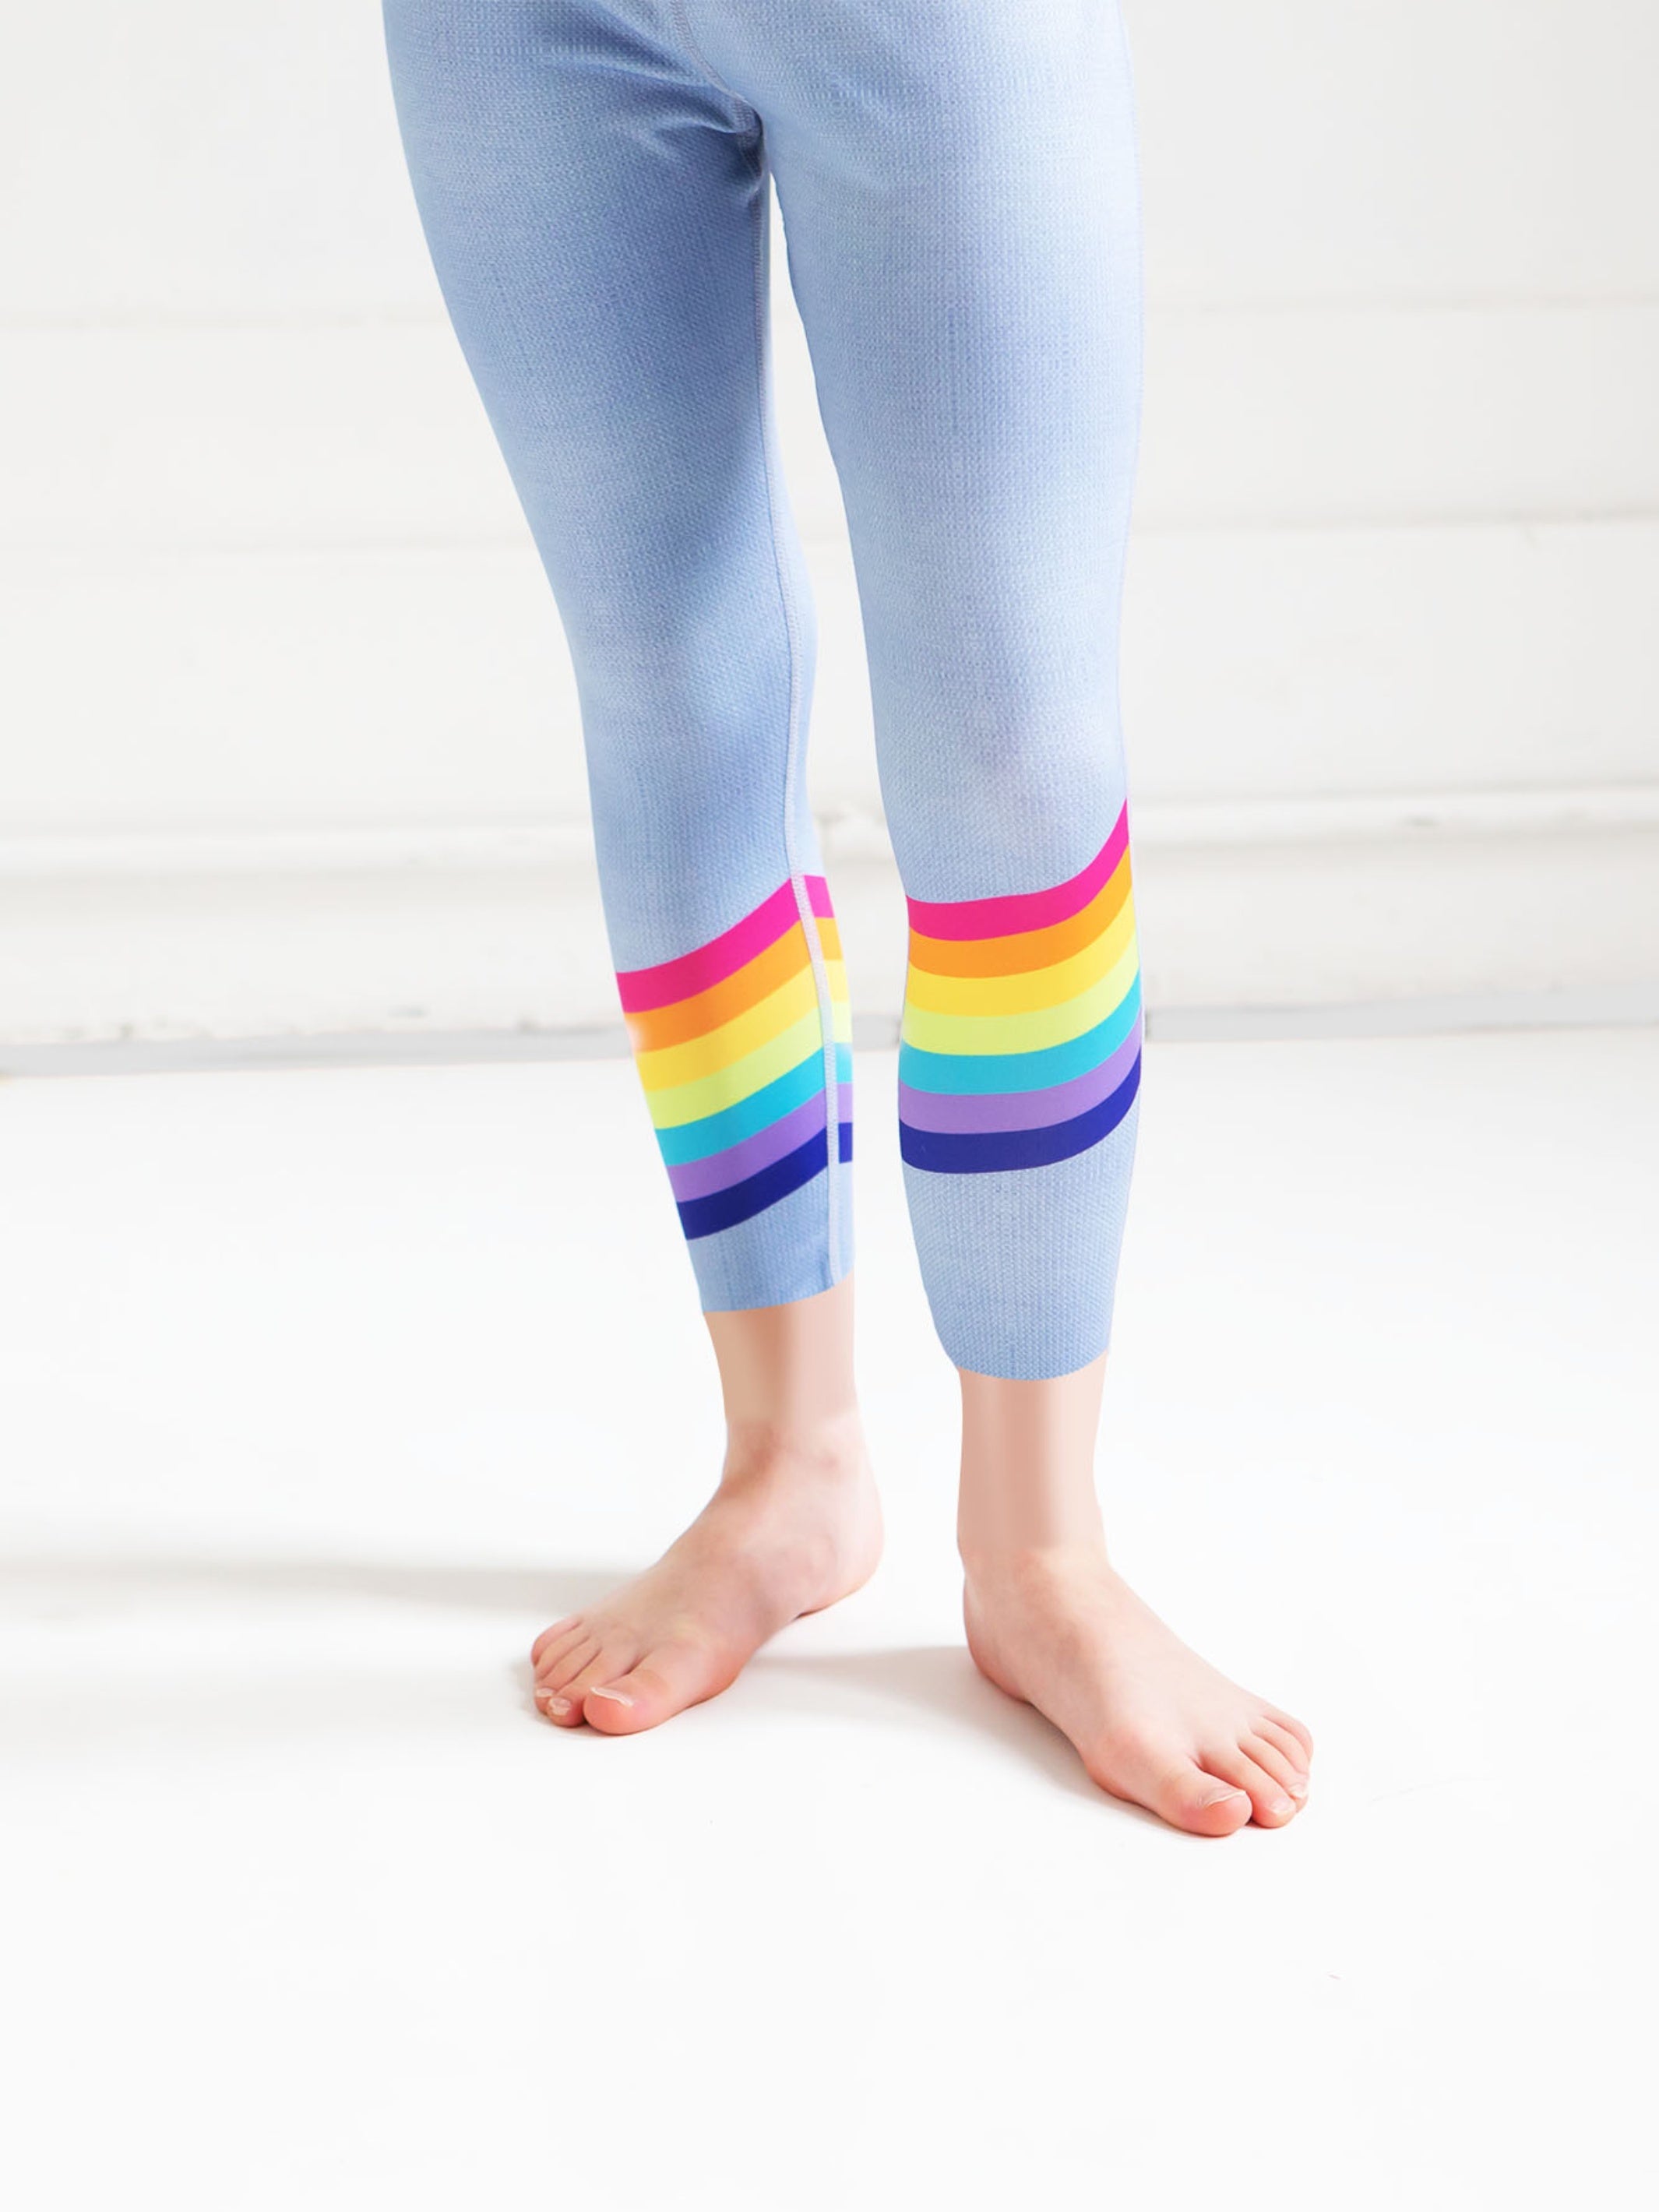 Pants Girls Spandex Nylon Capri Legging Elastic Waist in Rainbow Peace  Mommy and Me Matching Prints -  Canada